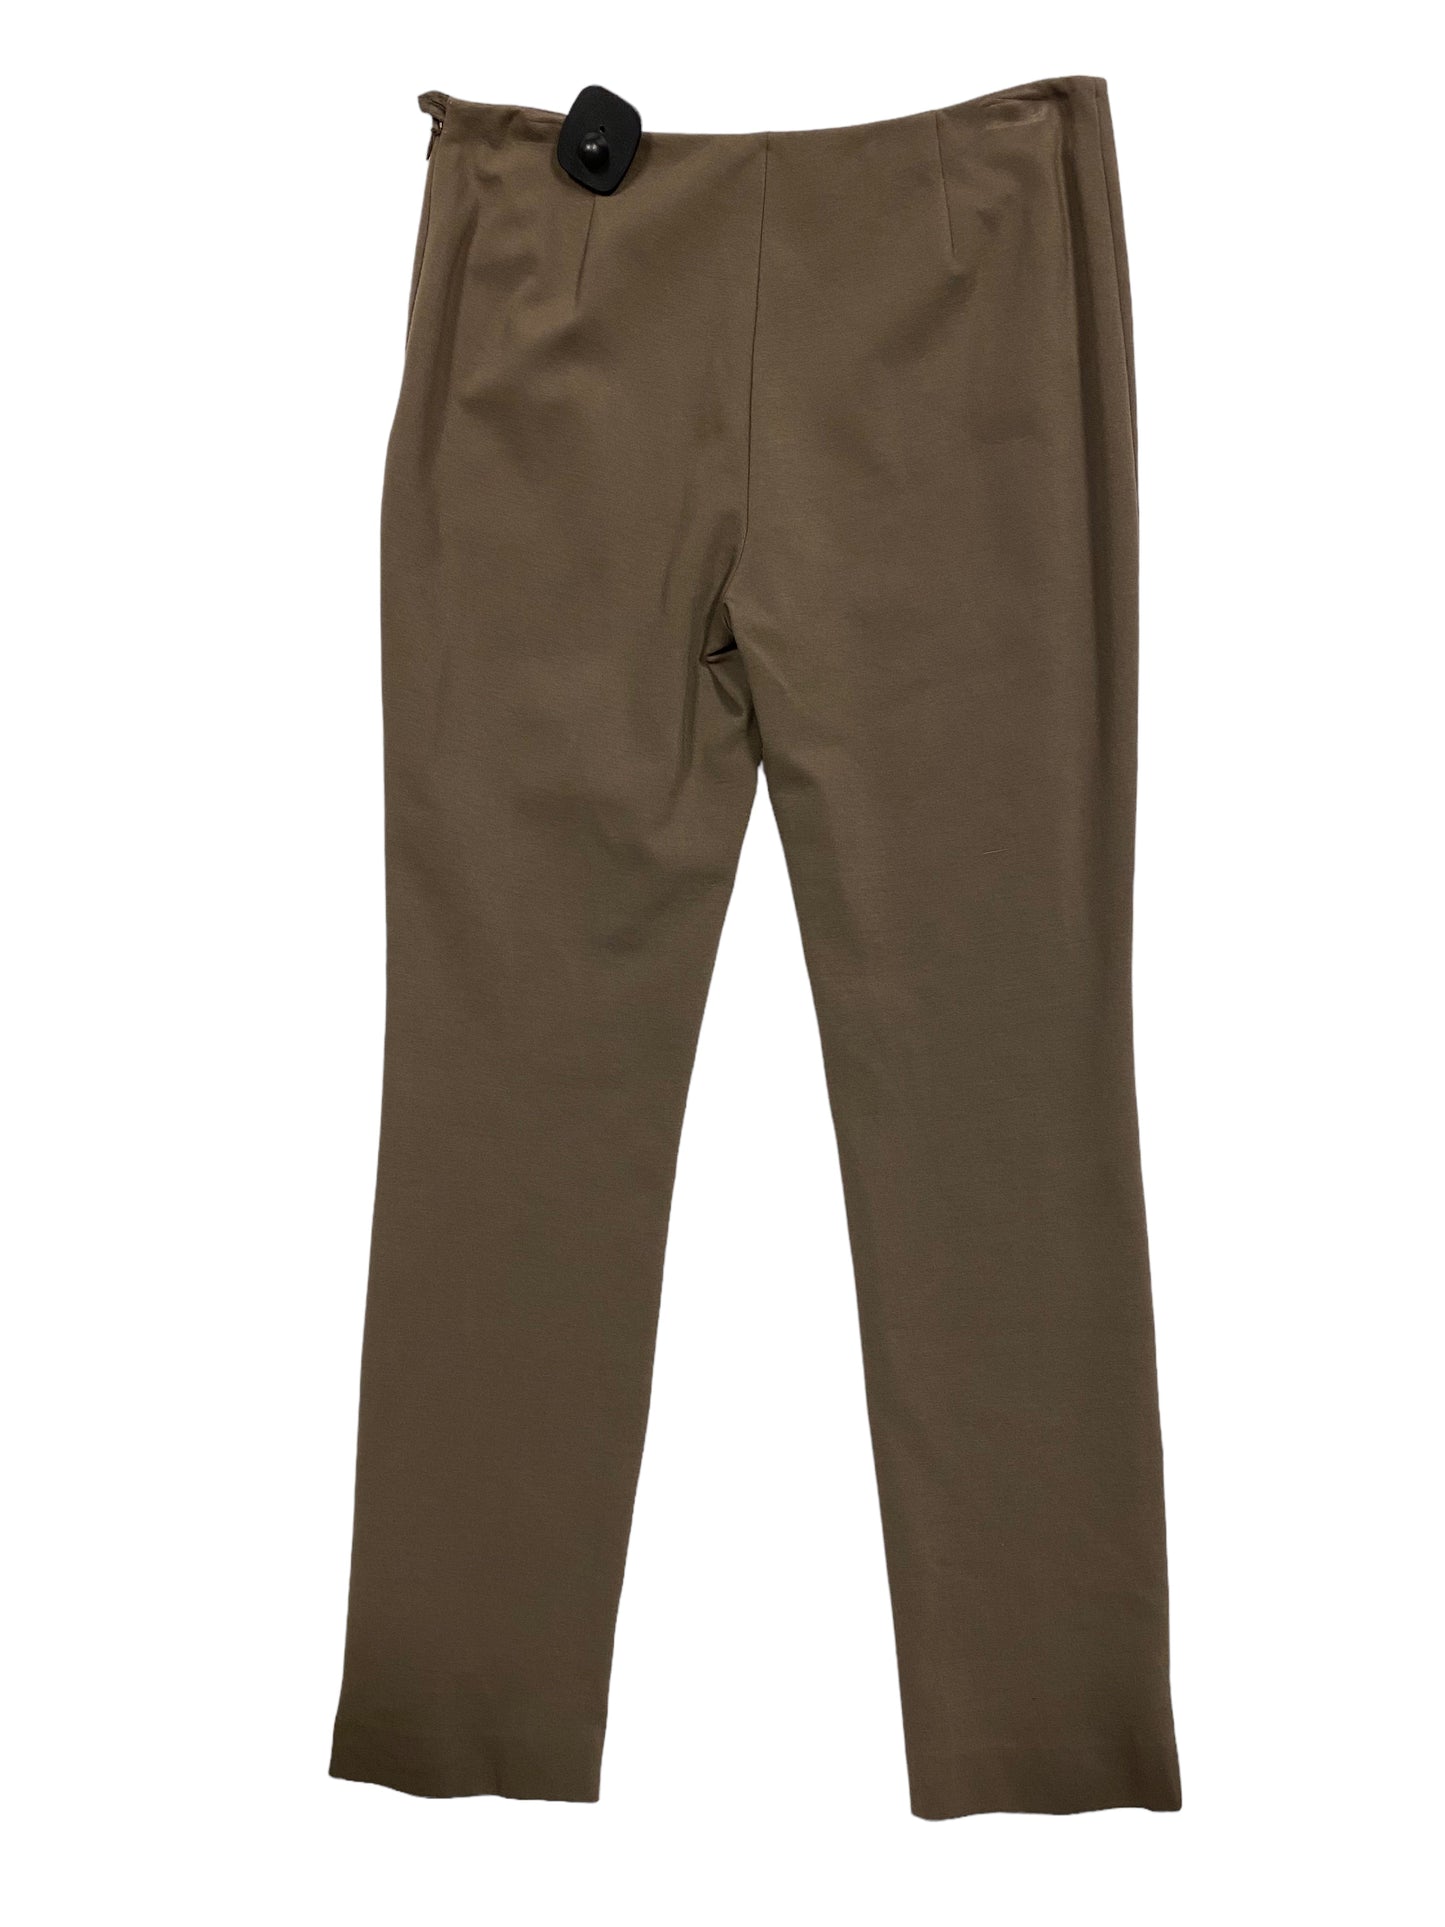 Brown Pants Designer Lafayette 148, Size S